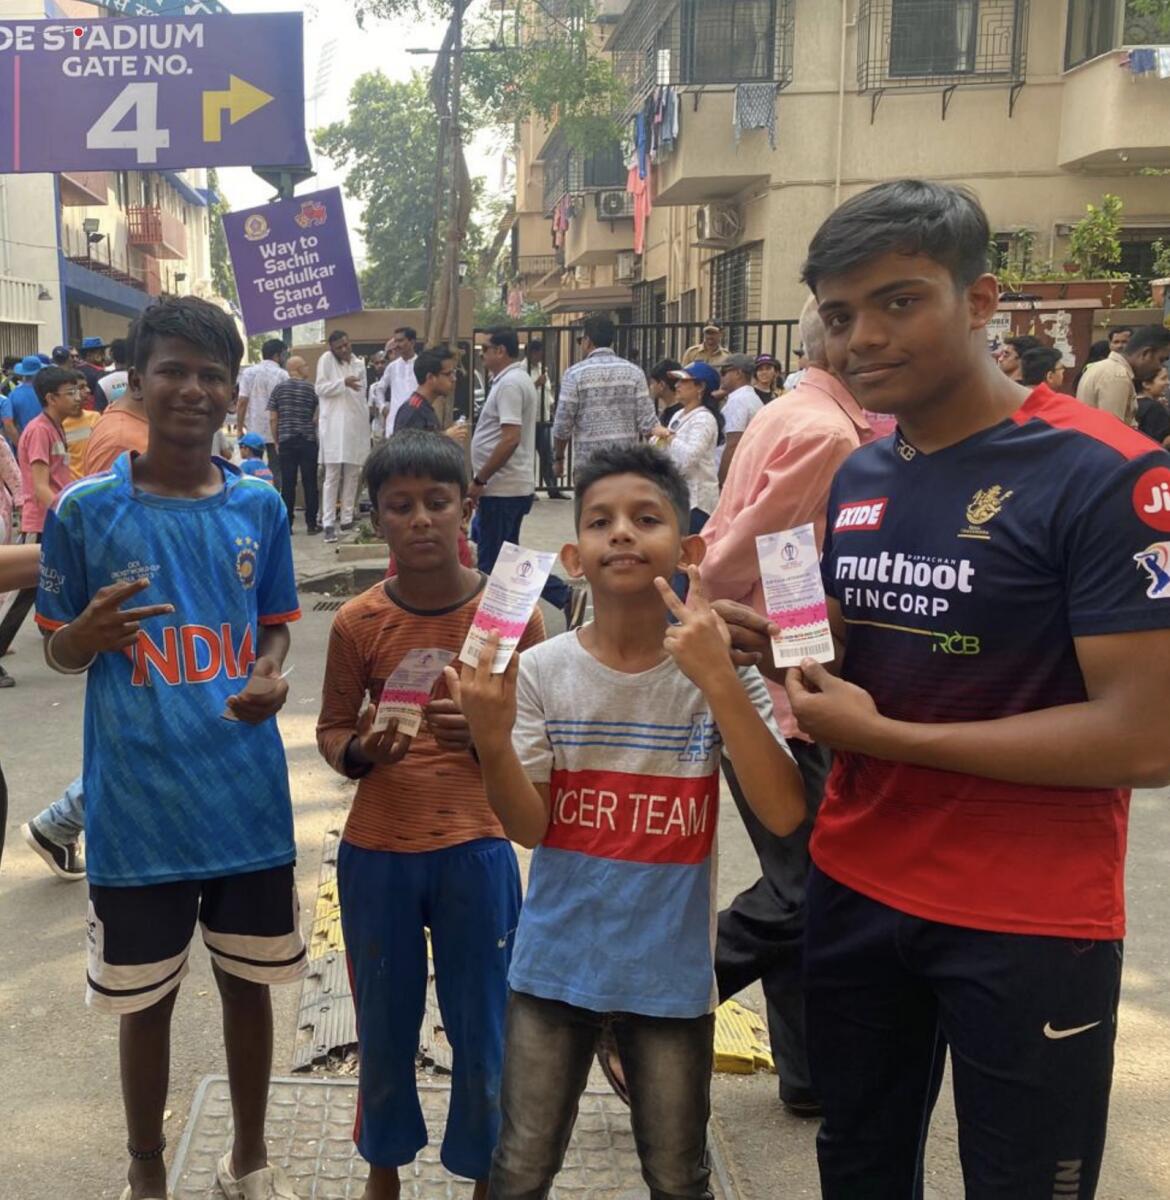 The Mumbai kids pose with their tickets